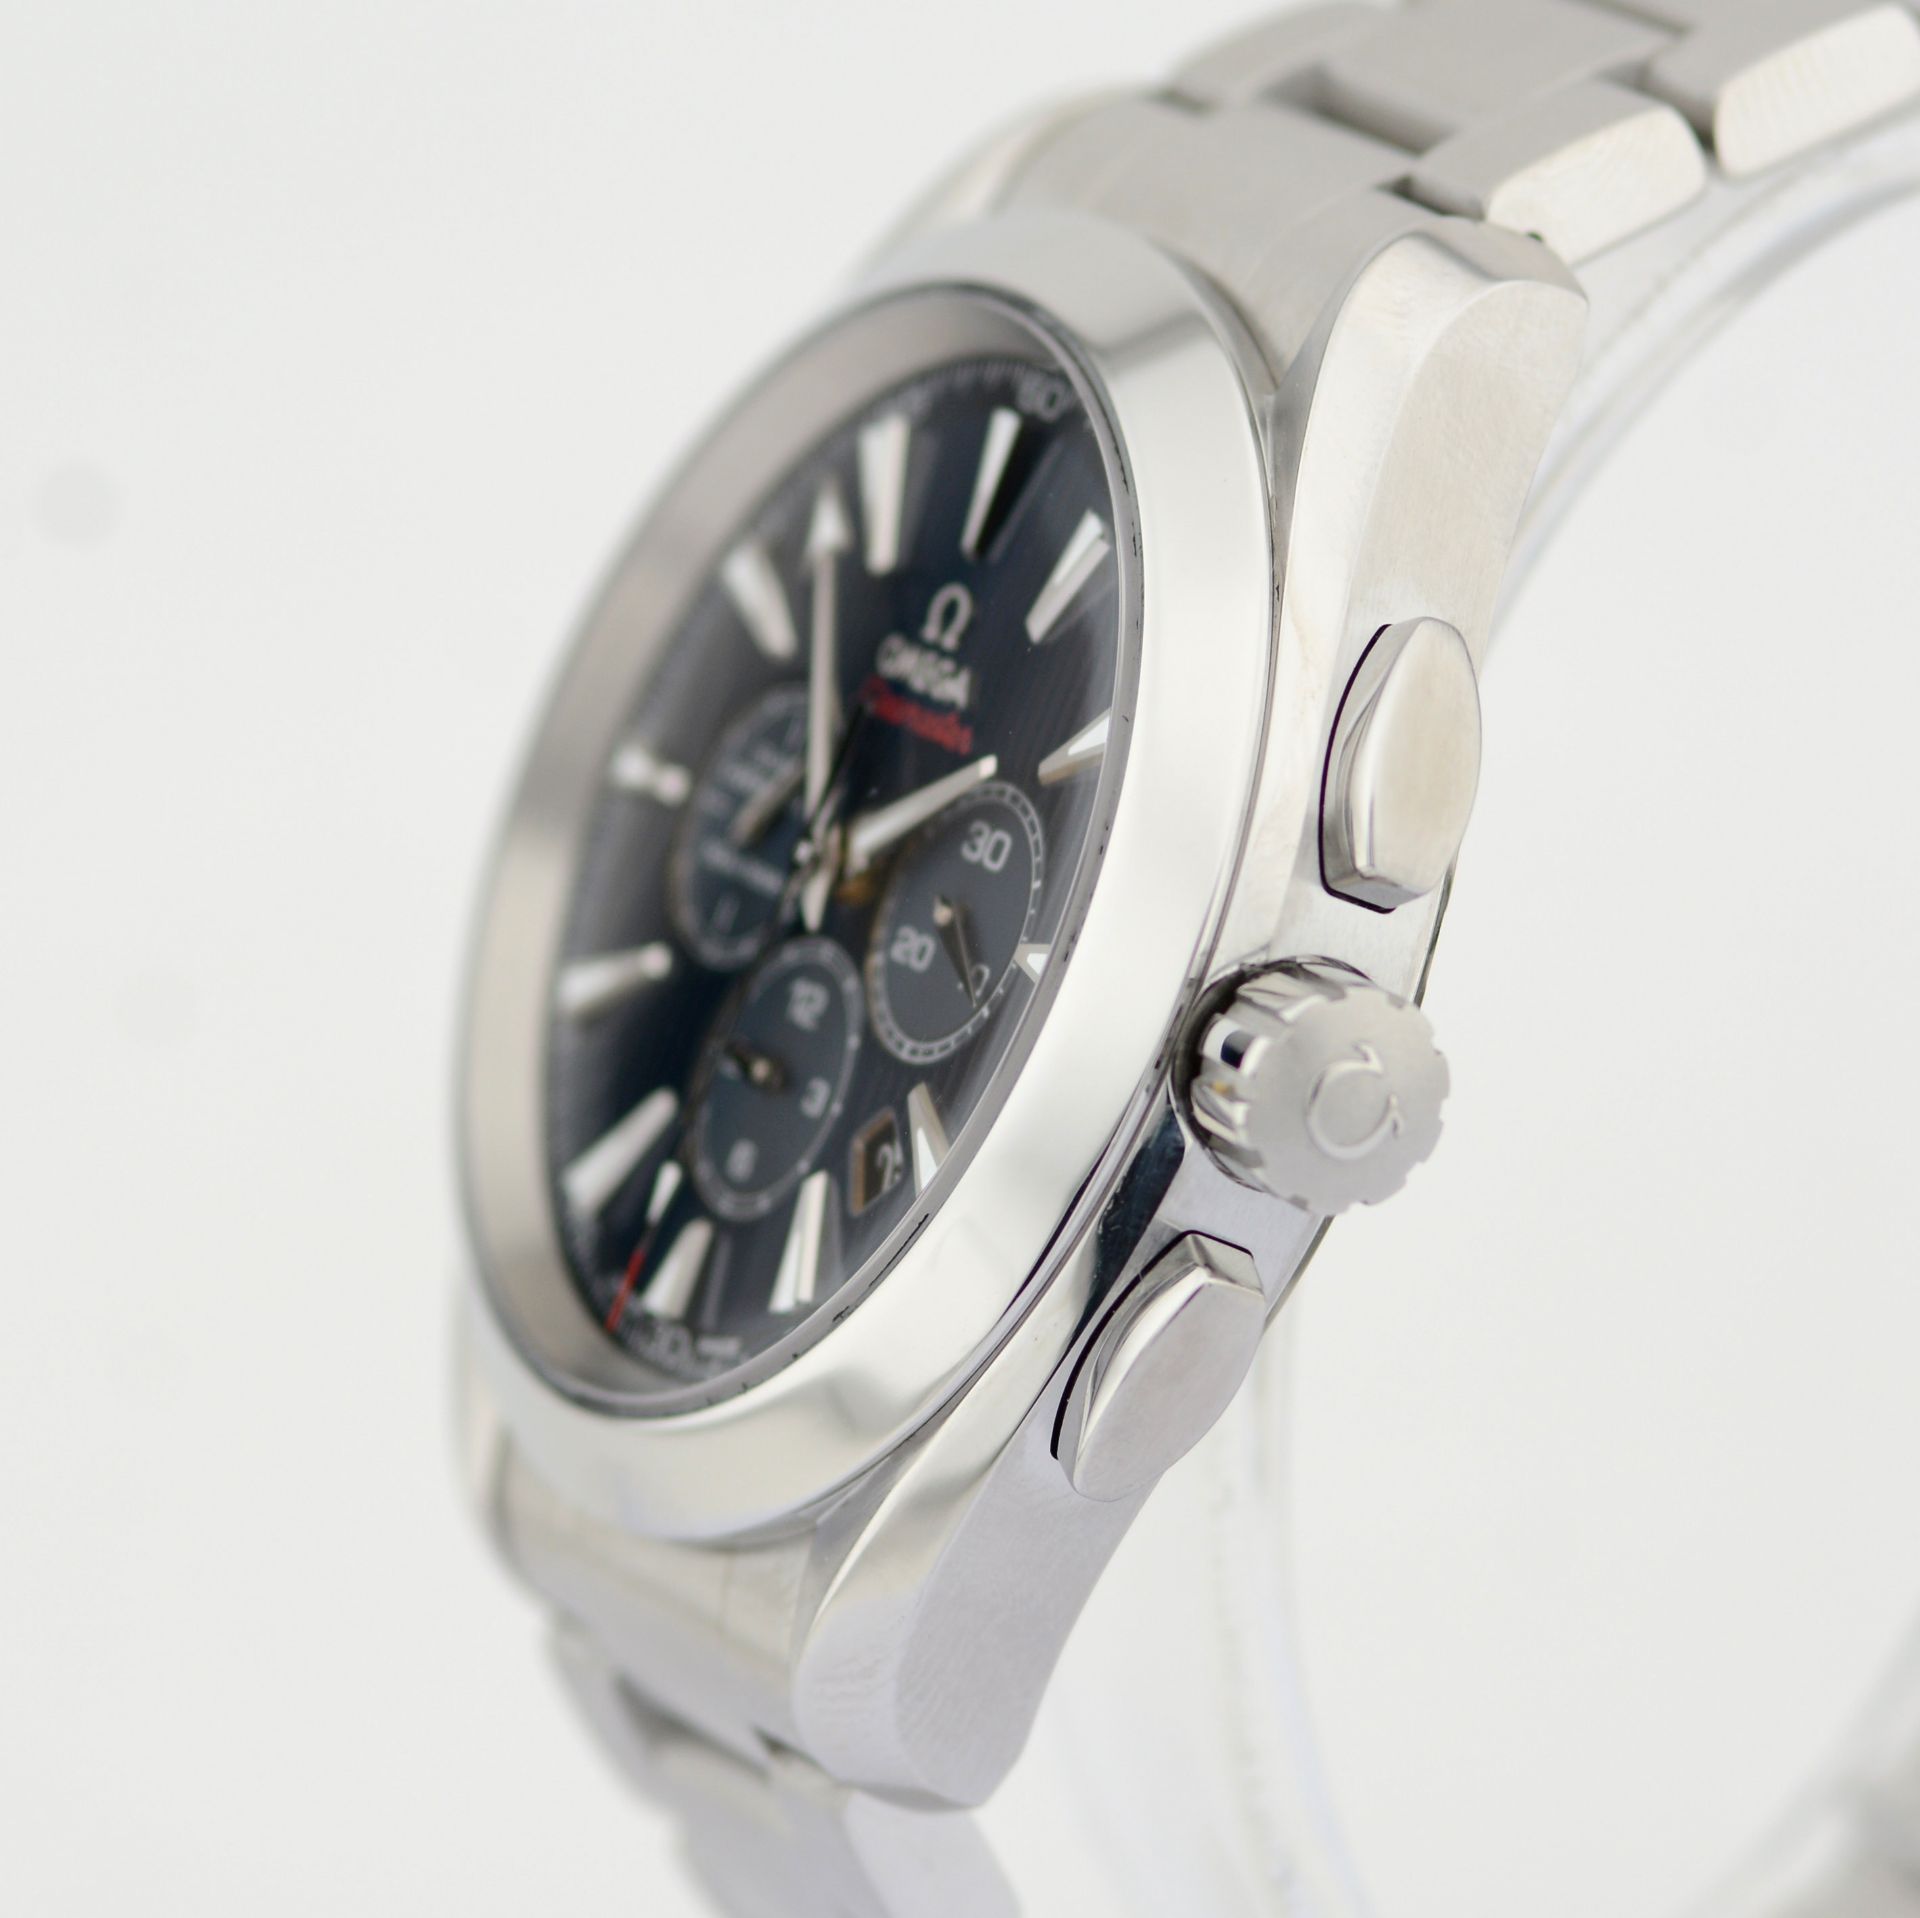 Omega / Seamaster Aqua Terra 44mm Chronograph London Olympics - Gentlmen's Steel Wrist Watch - Image 2 of 7